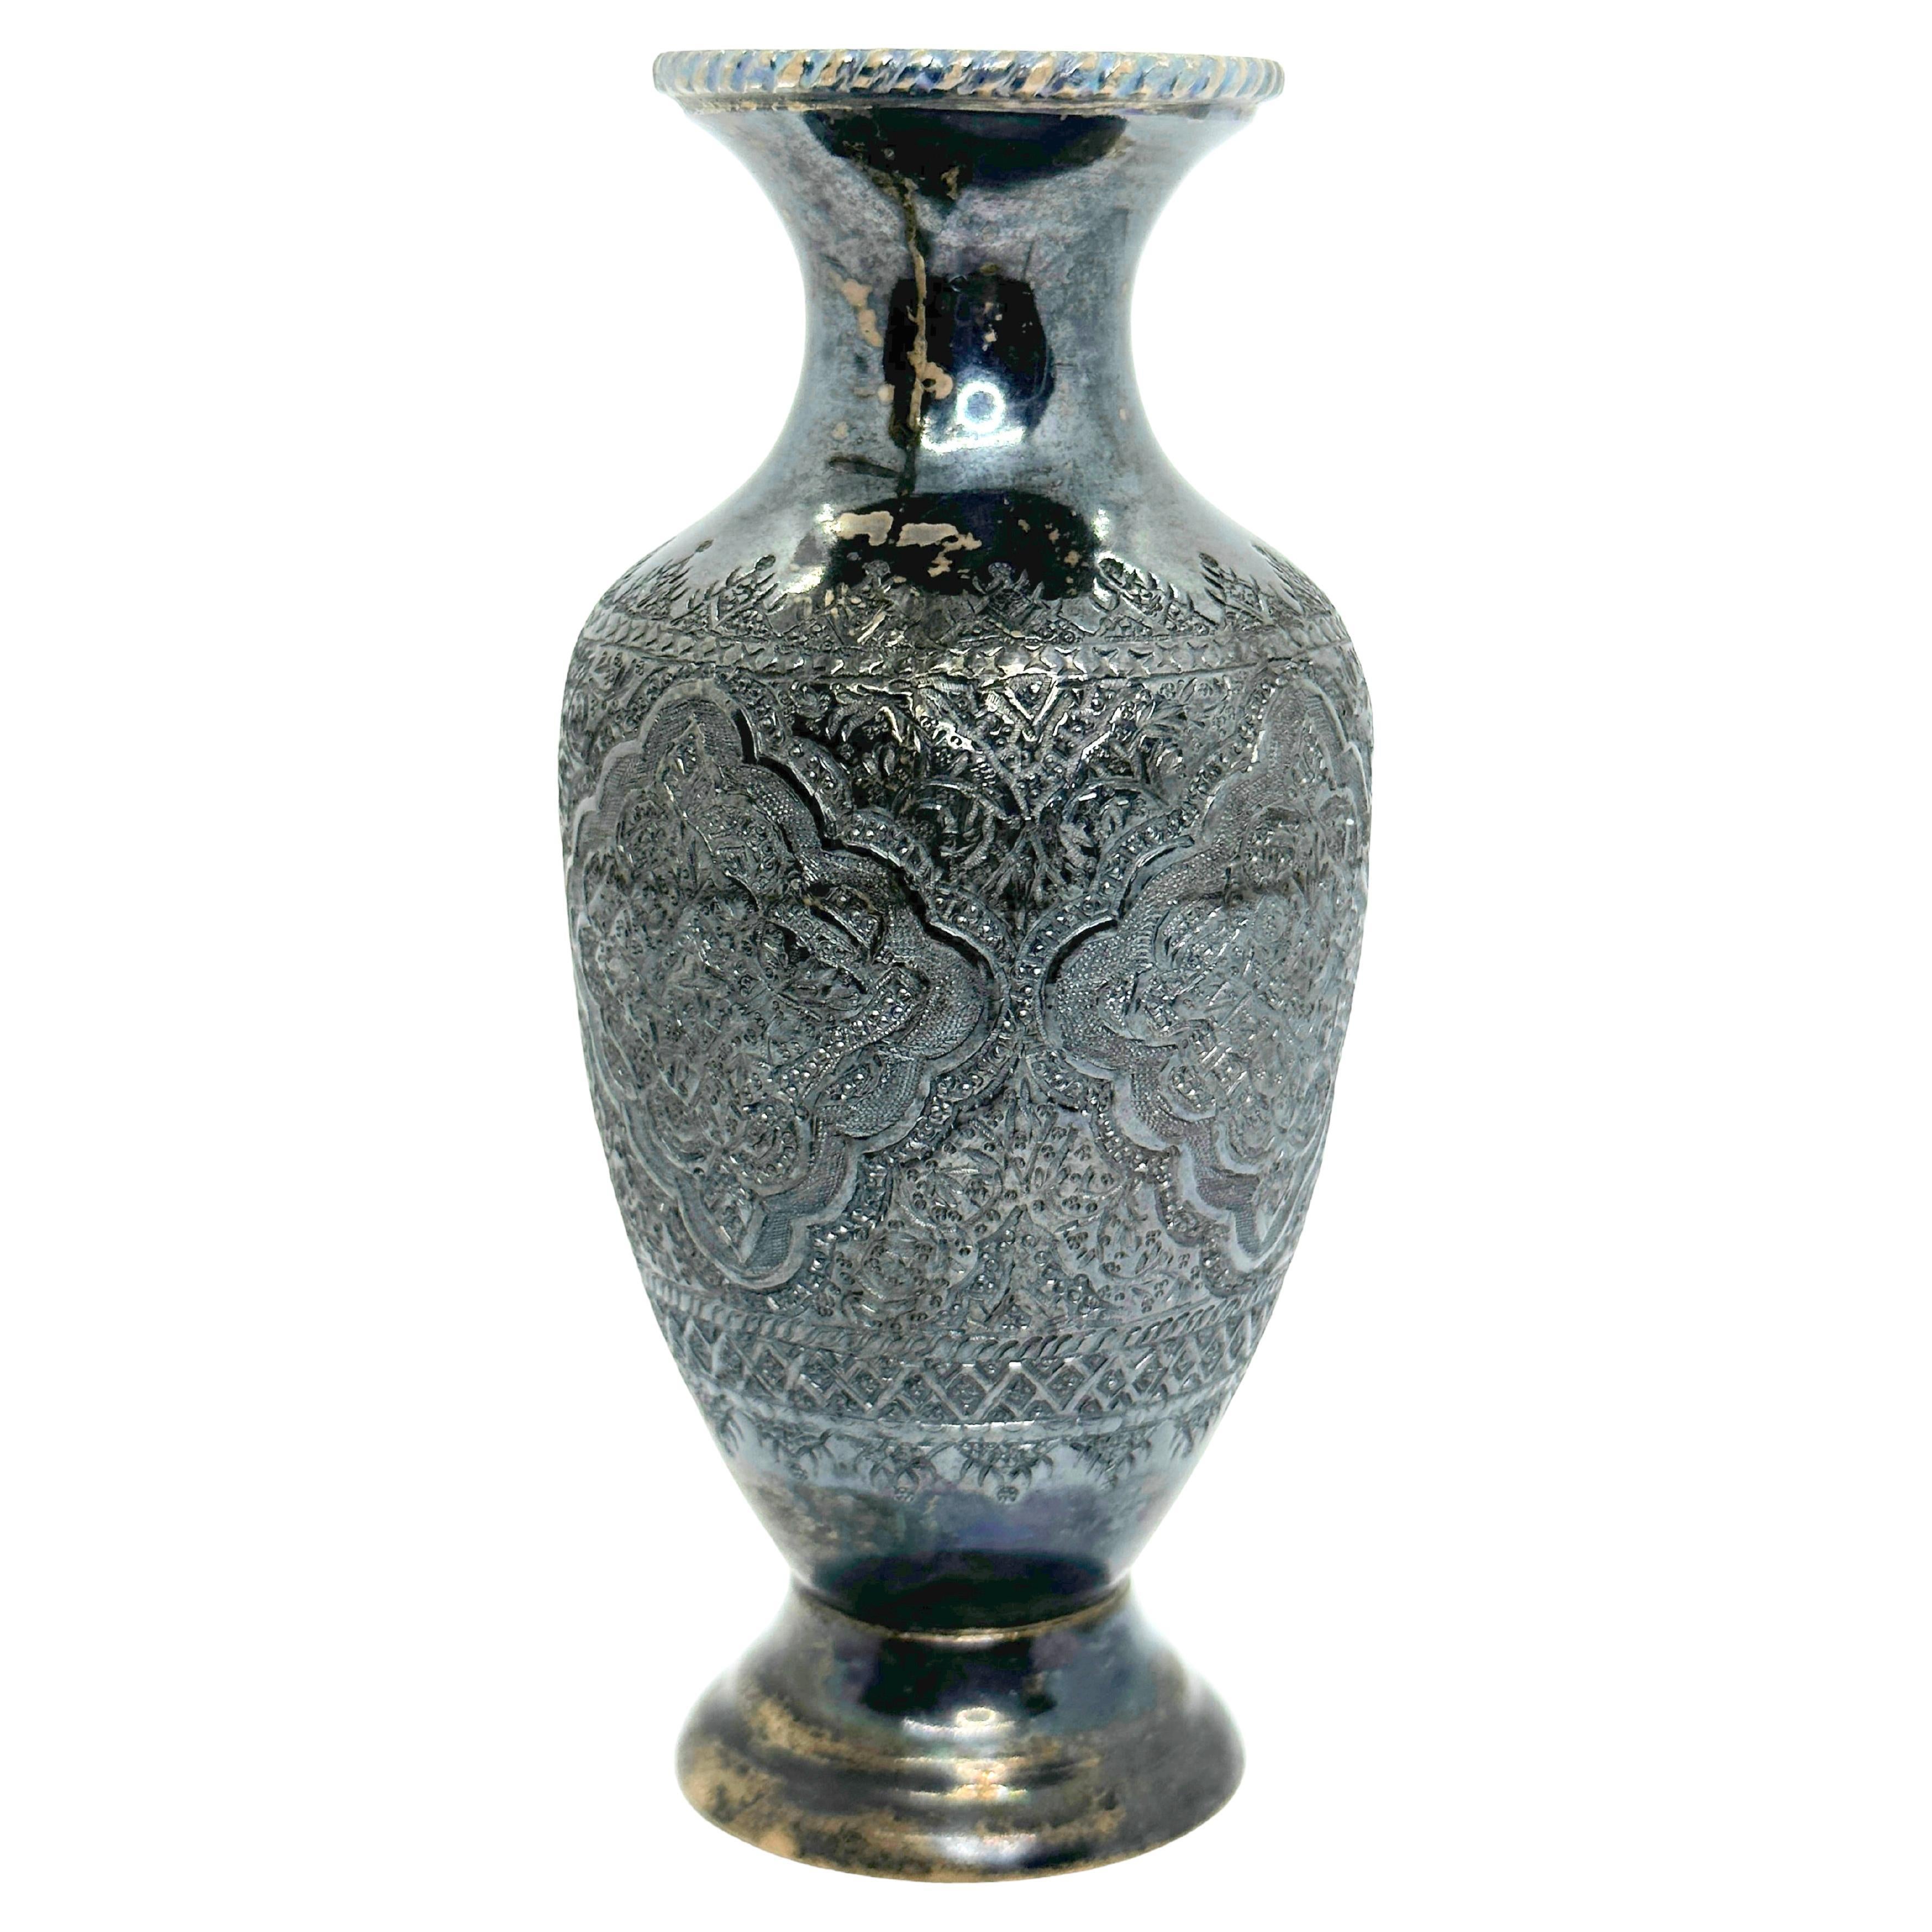 20th Century Handmade Silver Vase by Asian Artisans, Vintage